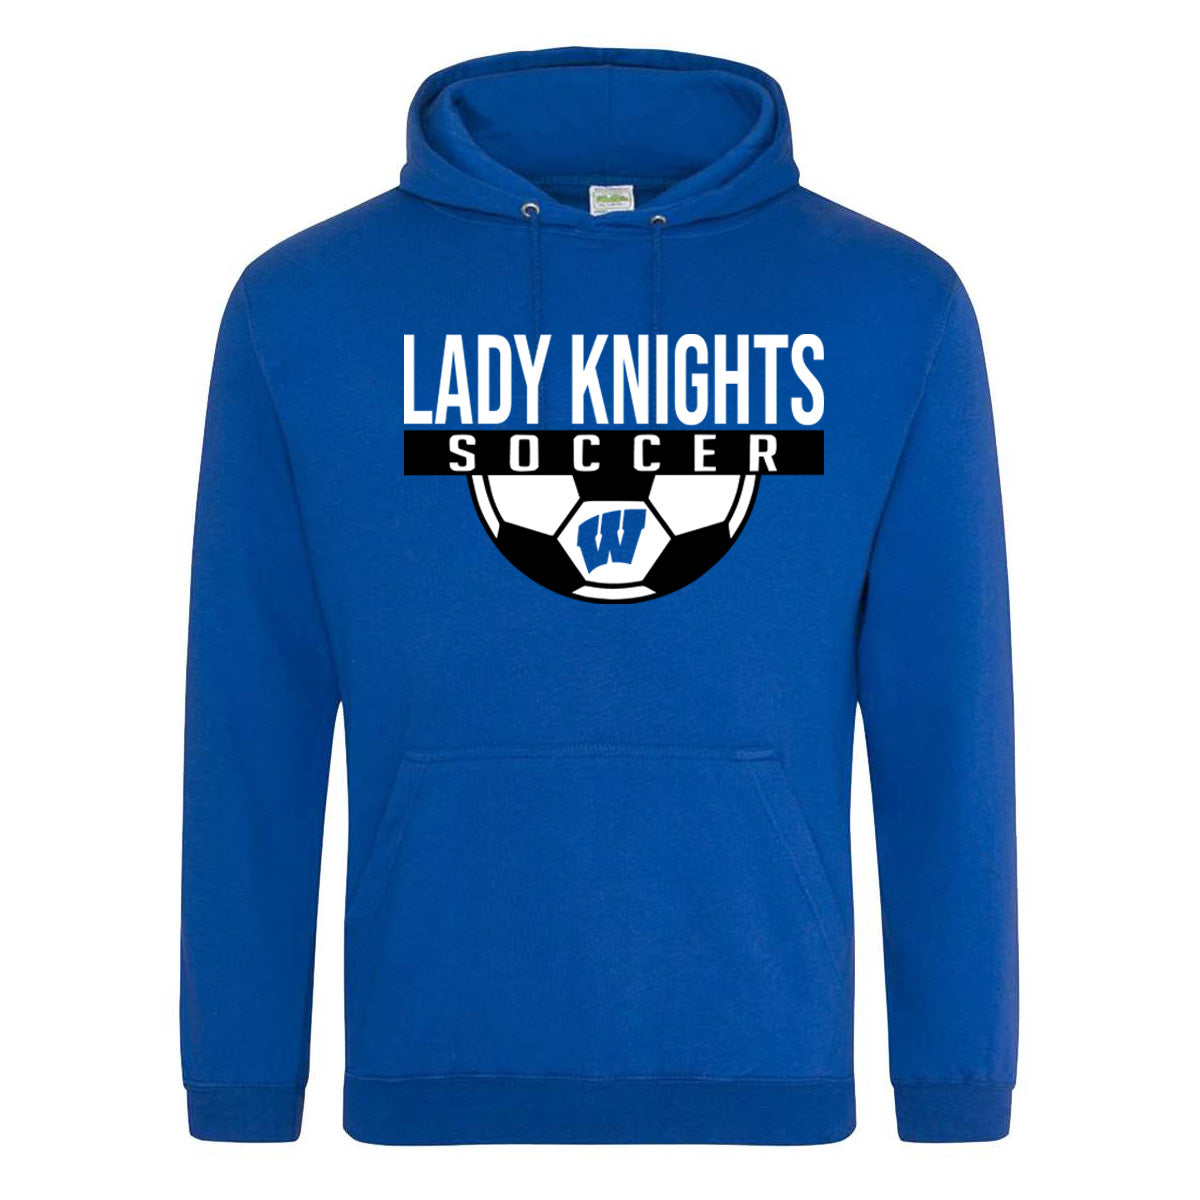 Windsor - Lady Knights Soccer (Half Ball) - Royal (Tee/DriFit/Hoodie/Sweatshirt) - Southern Grace Creations